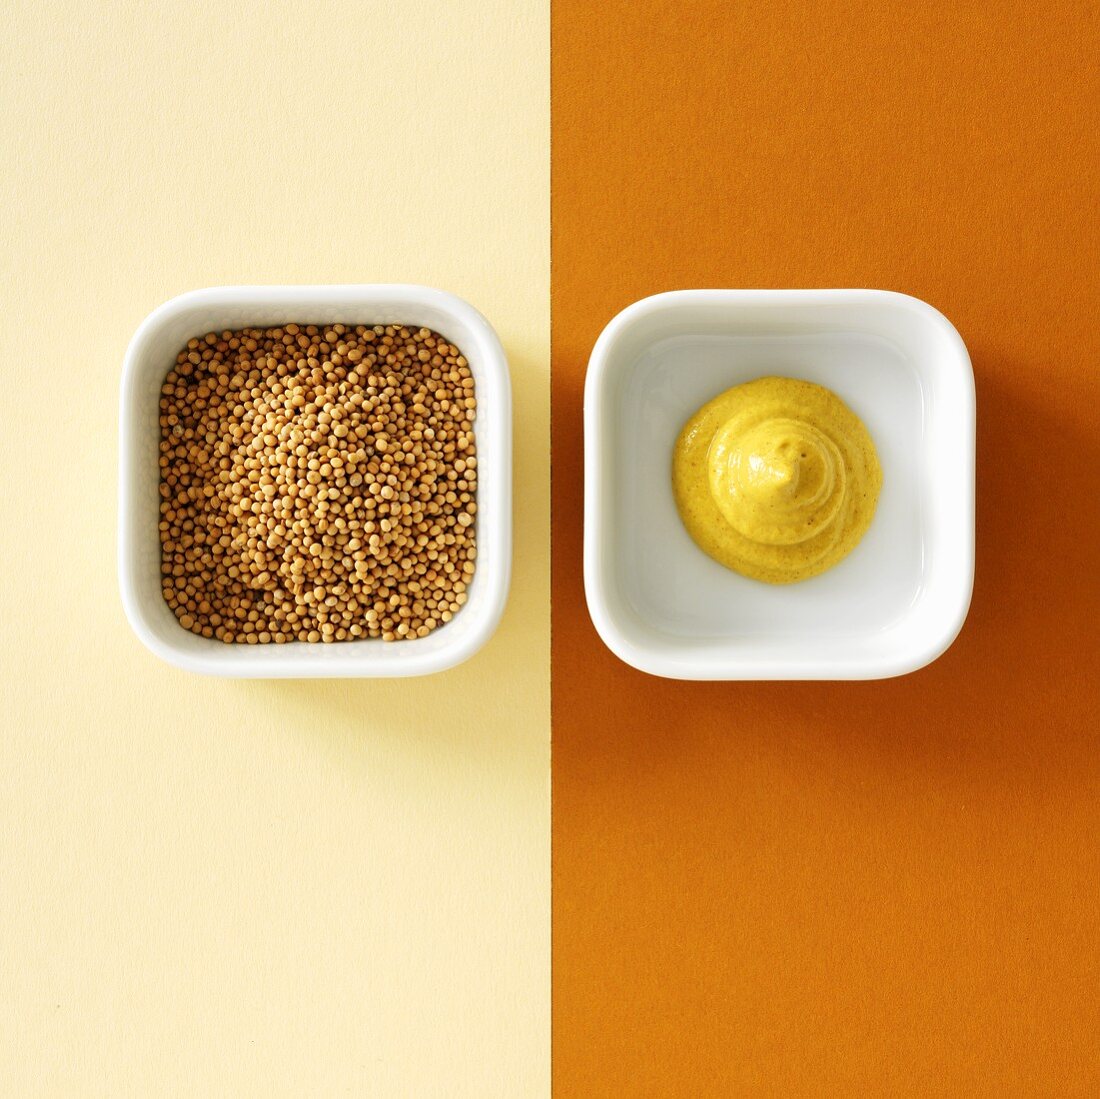 Mustard seeds and mustard (overhead view)